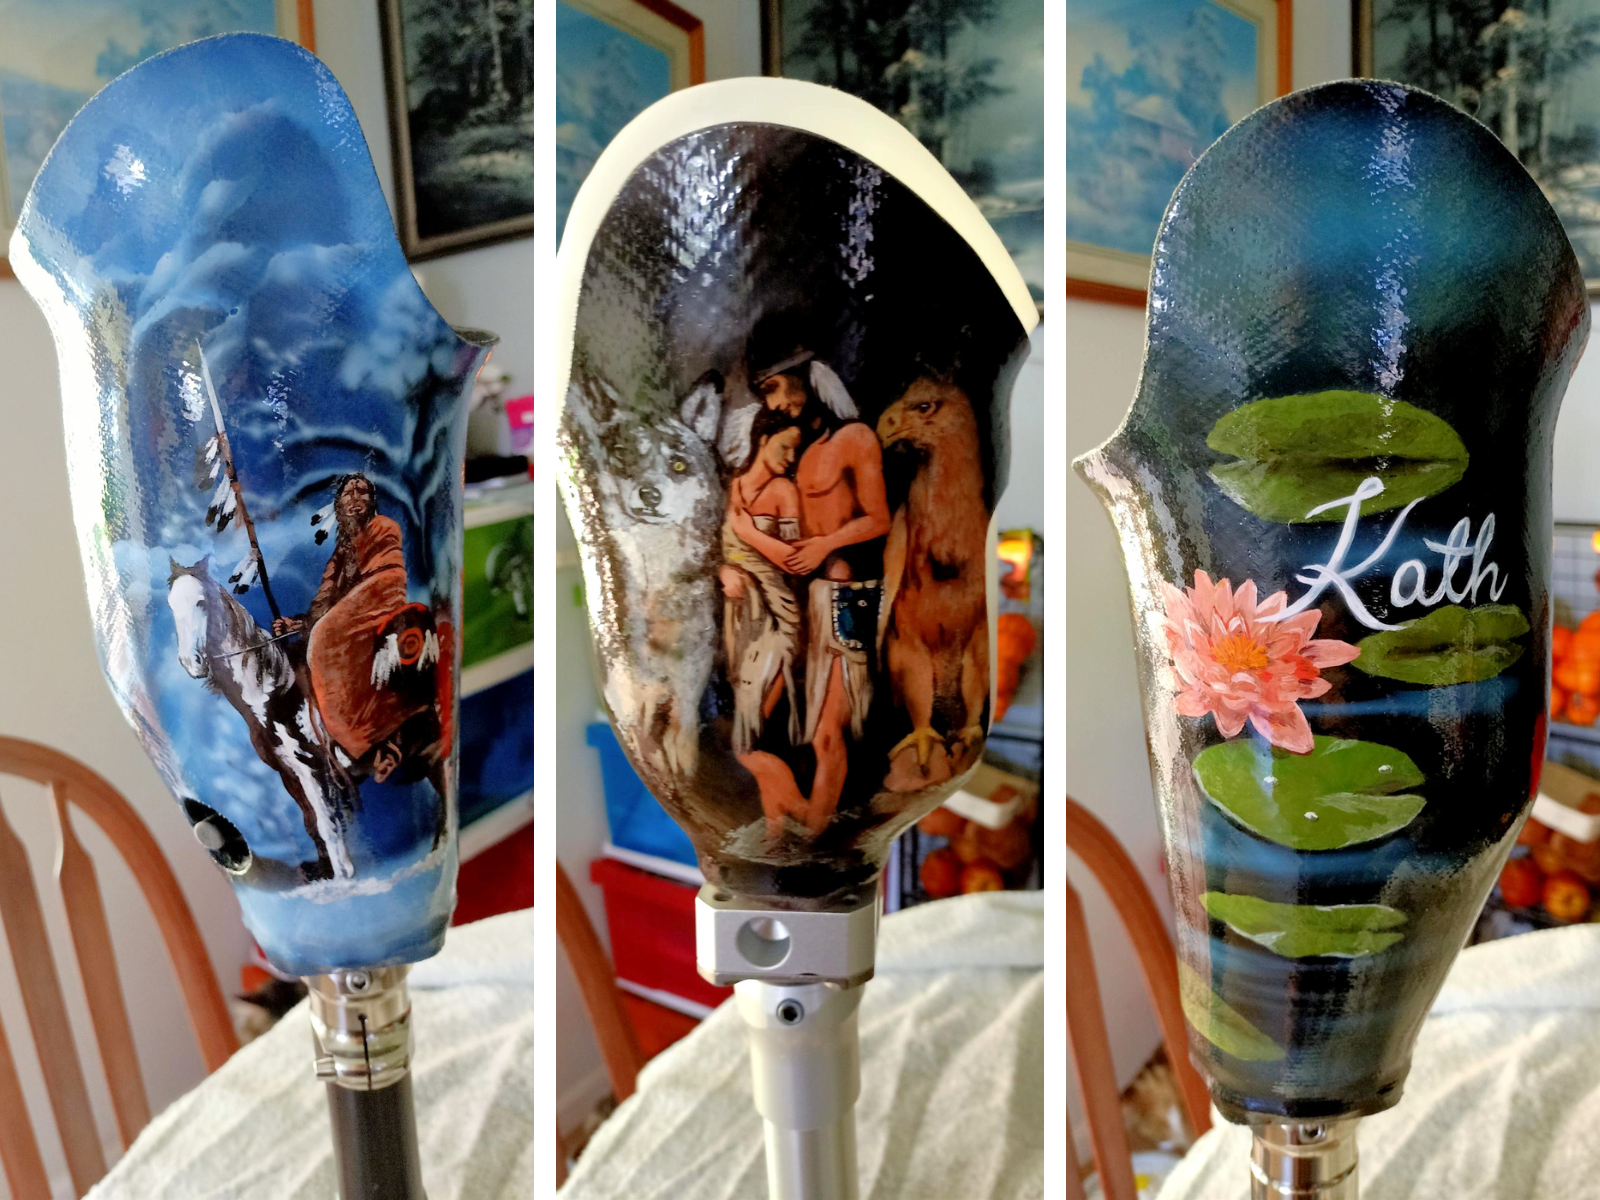 Collage of artwork on prosthetic legs